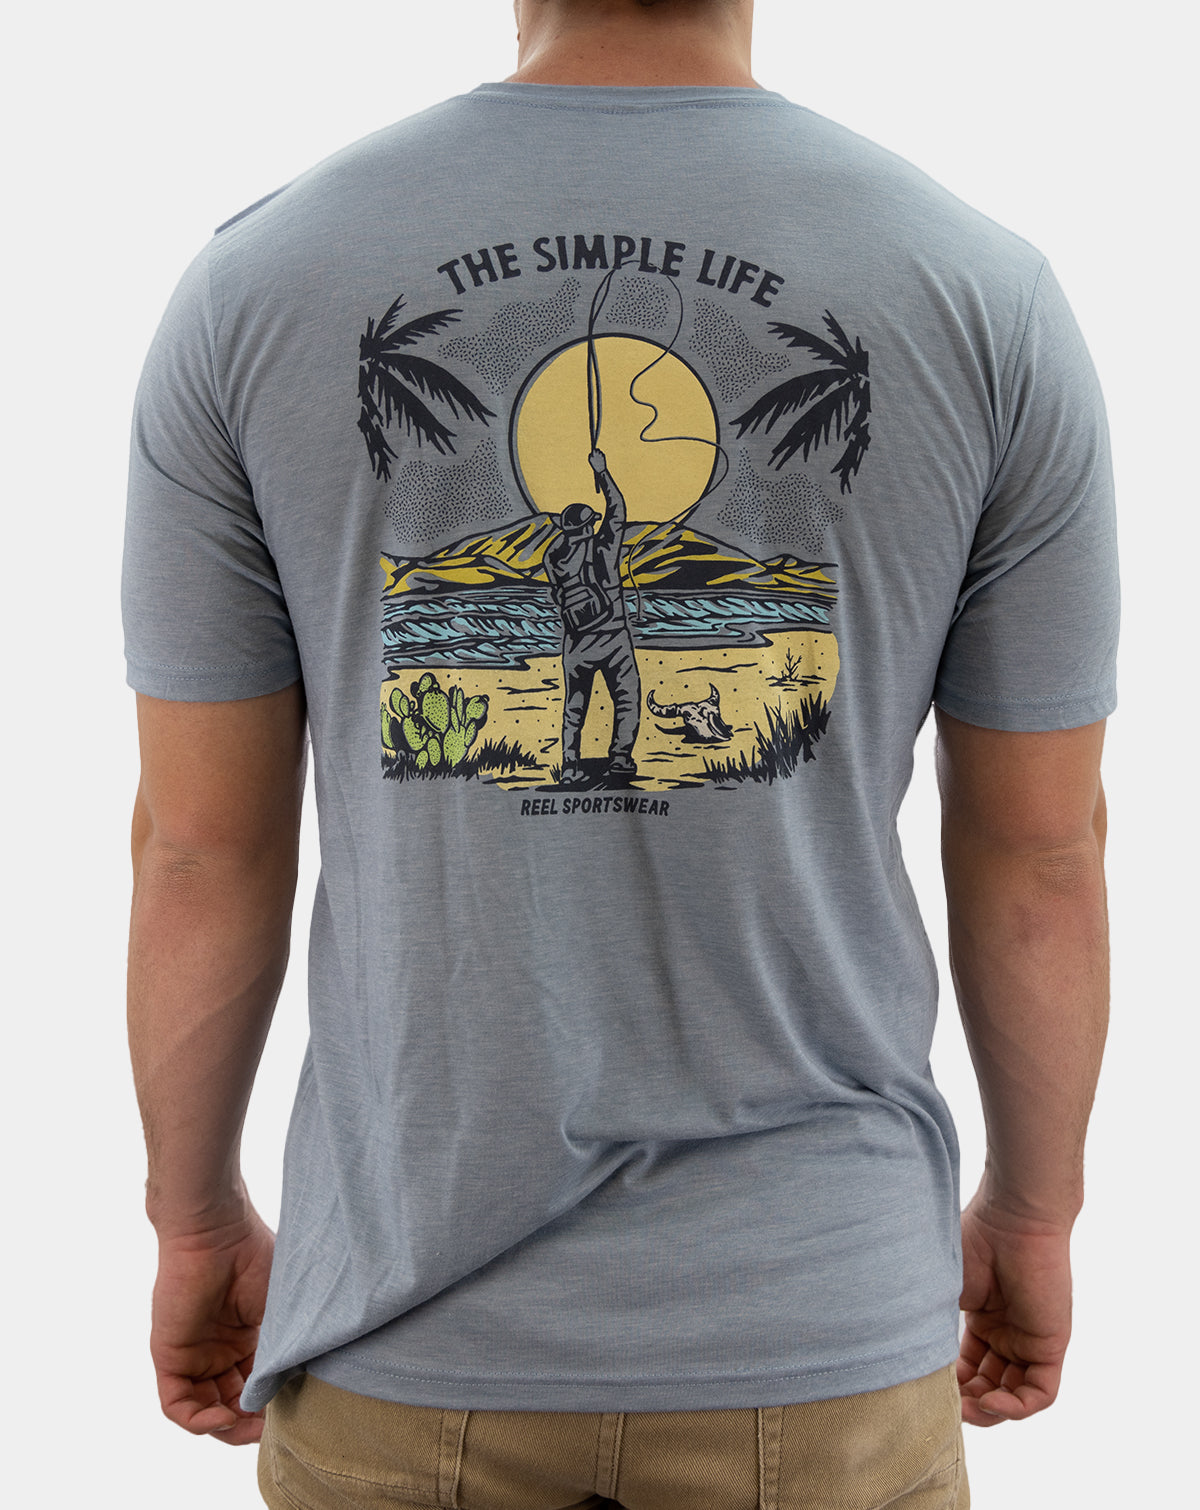 The Simple Life - men's Fishing tee shirt - reel sportswear